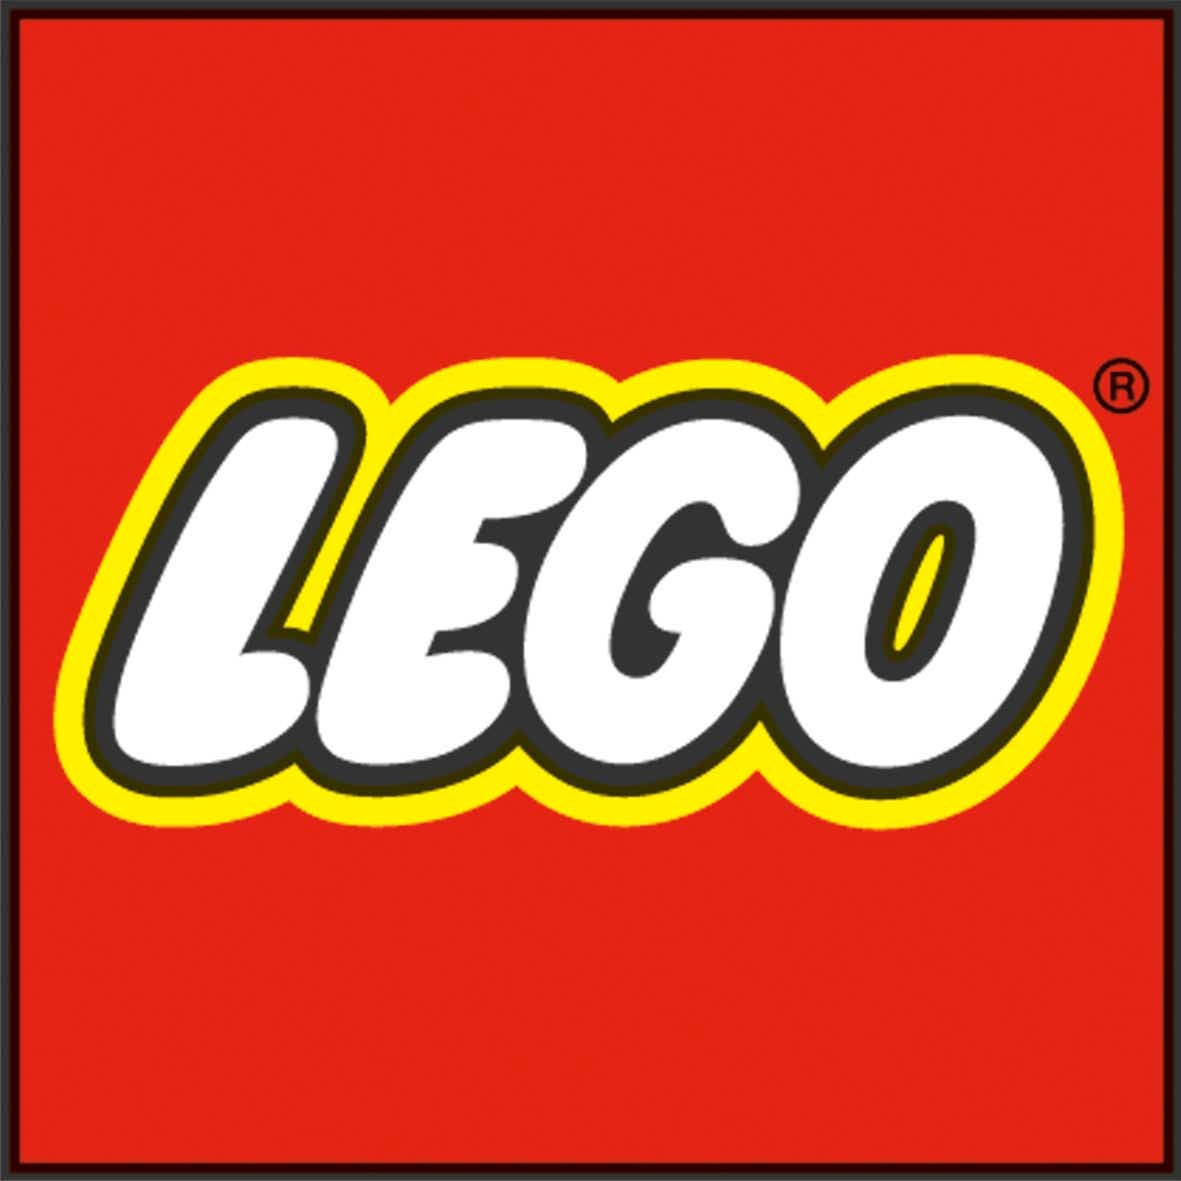 The Lego Logo